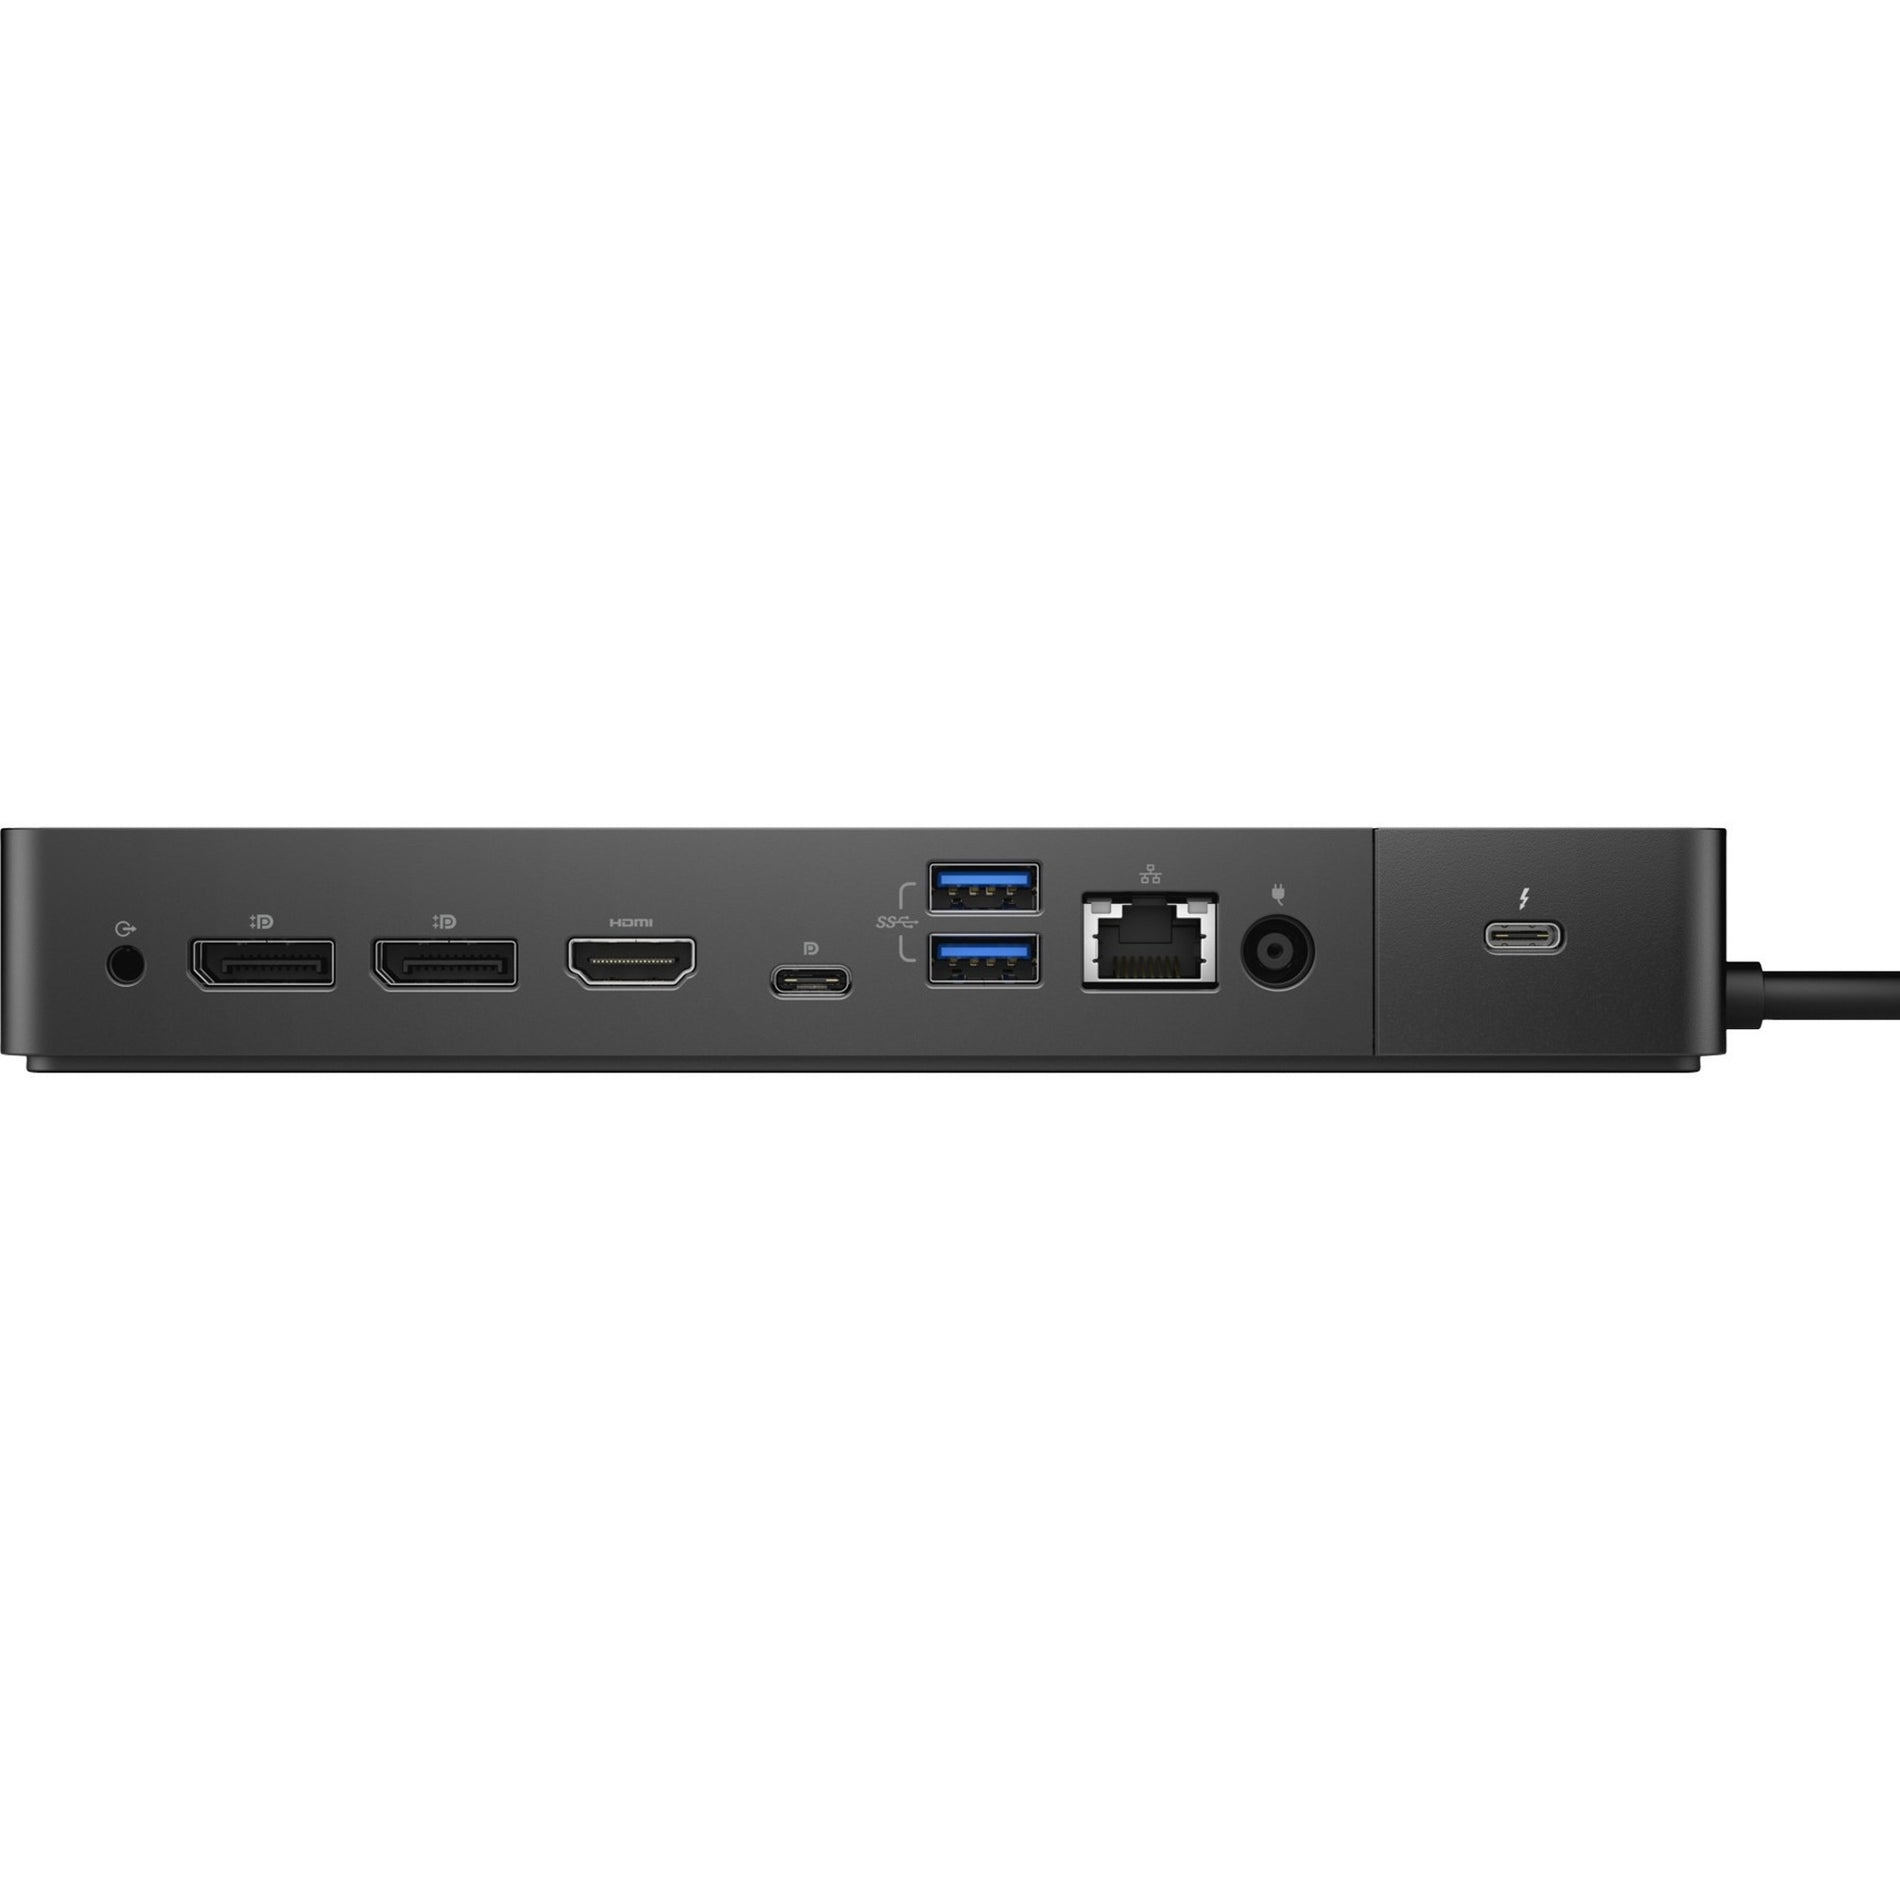 Dell WD19TB Docking Station, 6 USB Ports, HDMI, DisplayPort, Thunderbolt, USB-C, 210W Power Supply